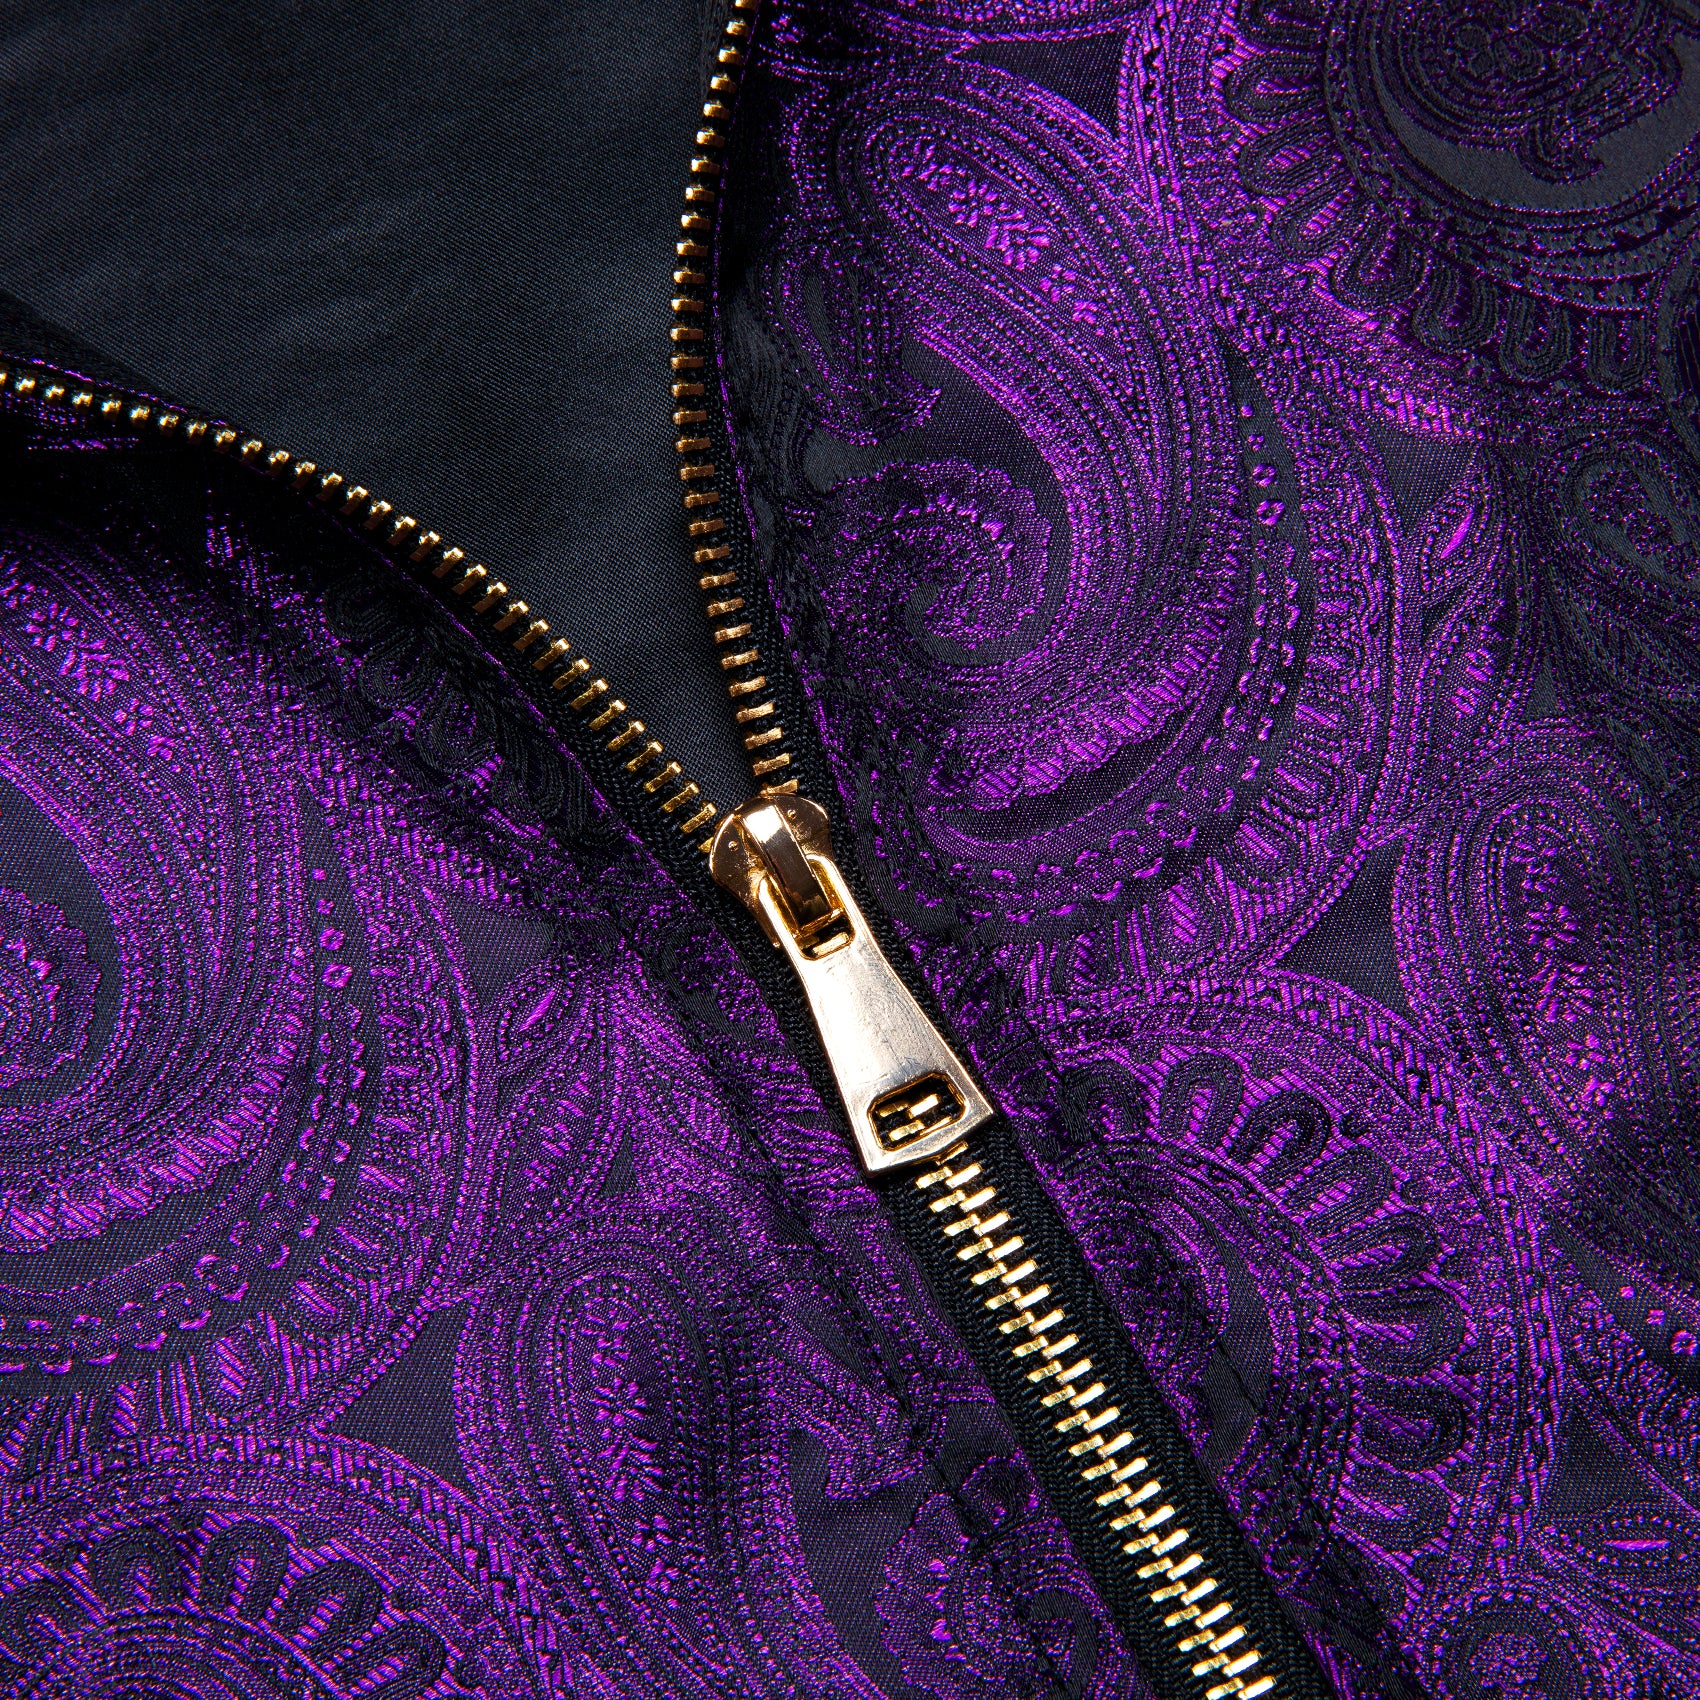 Mens Purple Jacquard Paisley Jacket